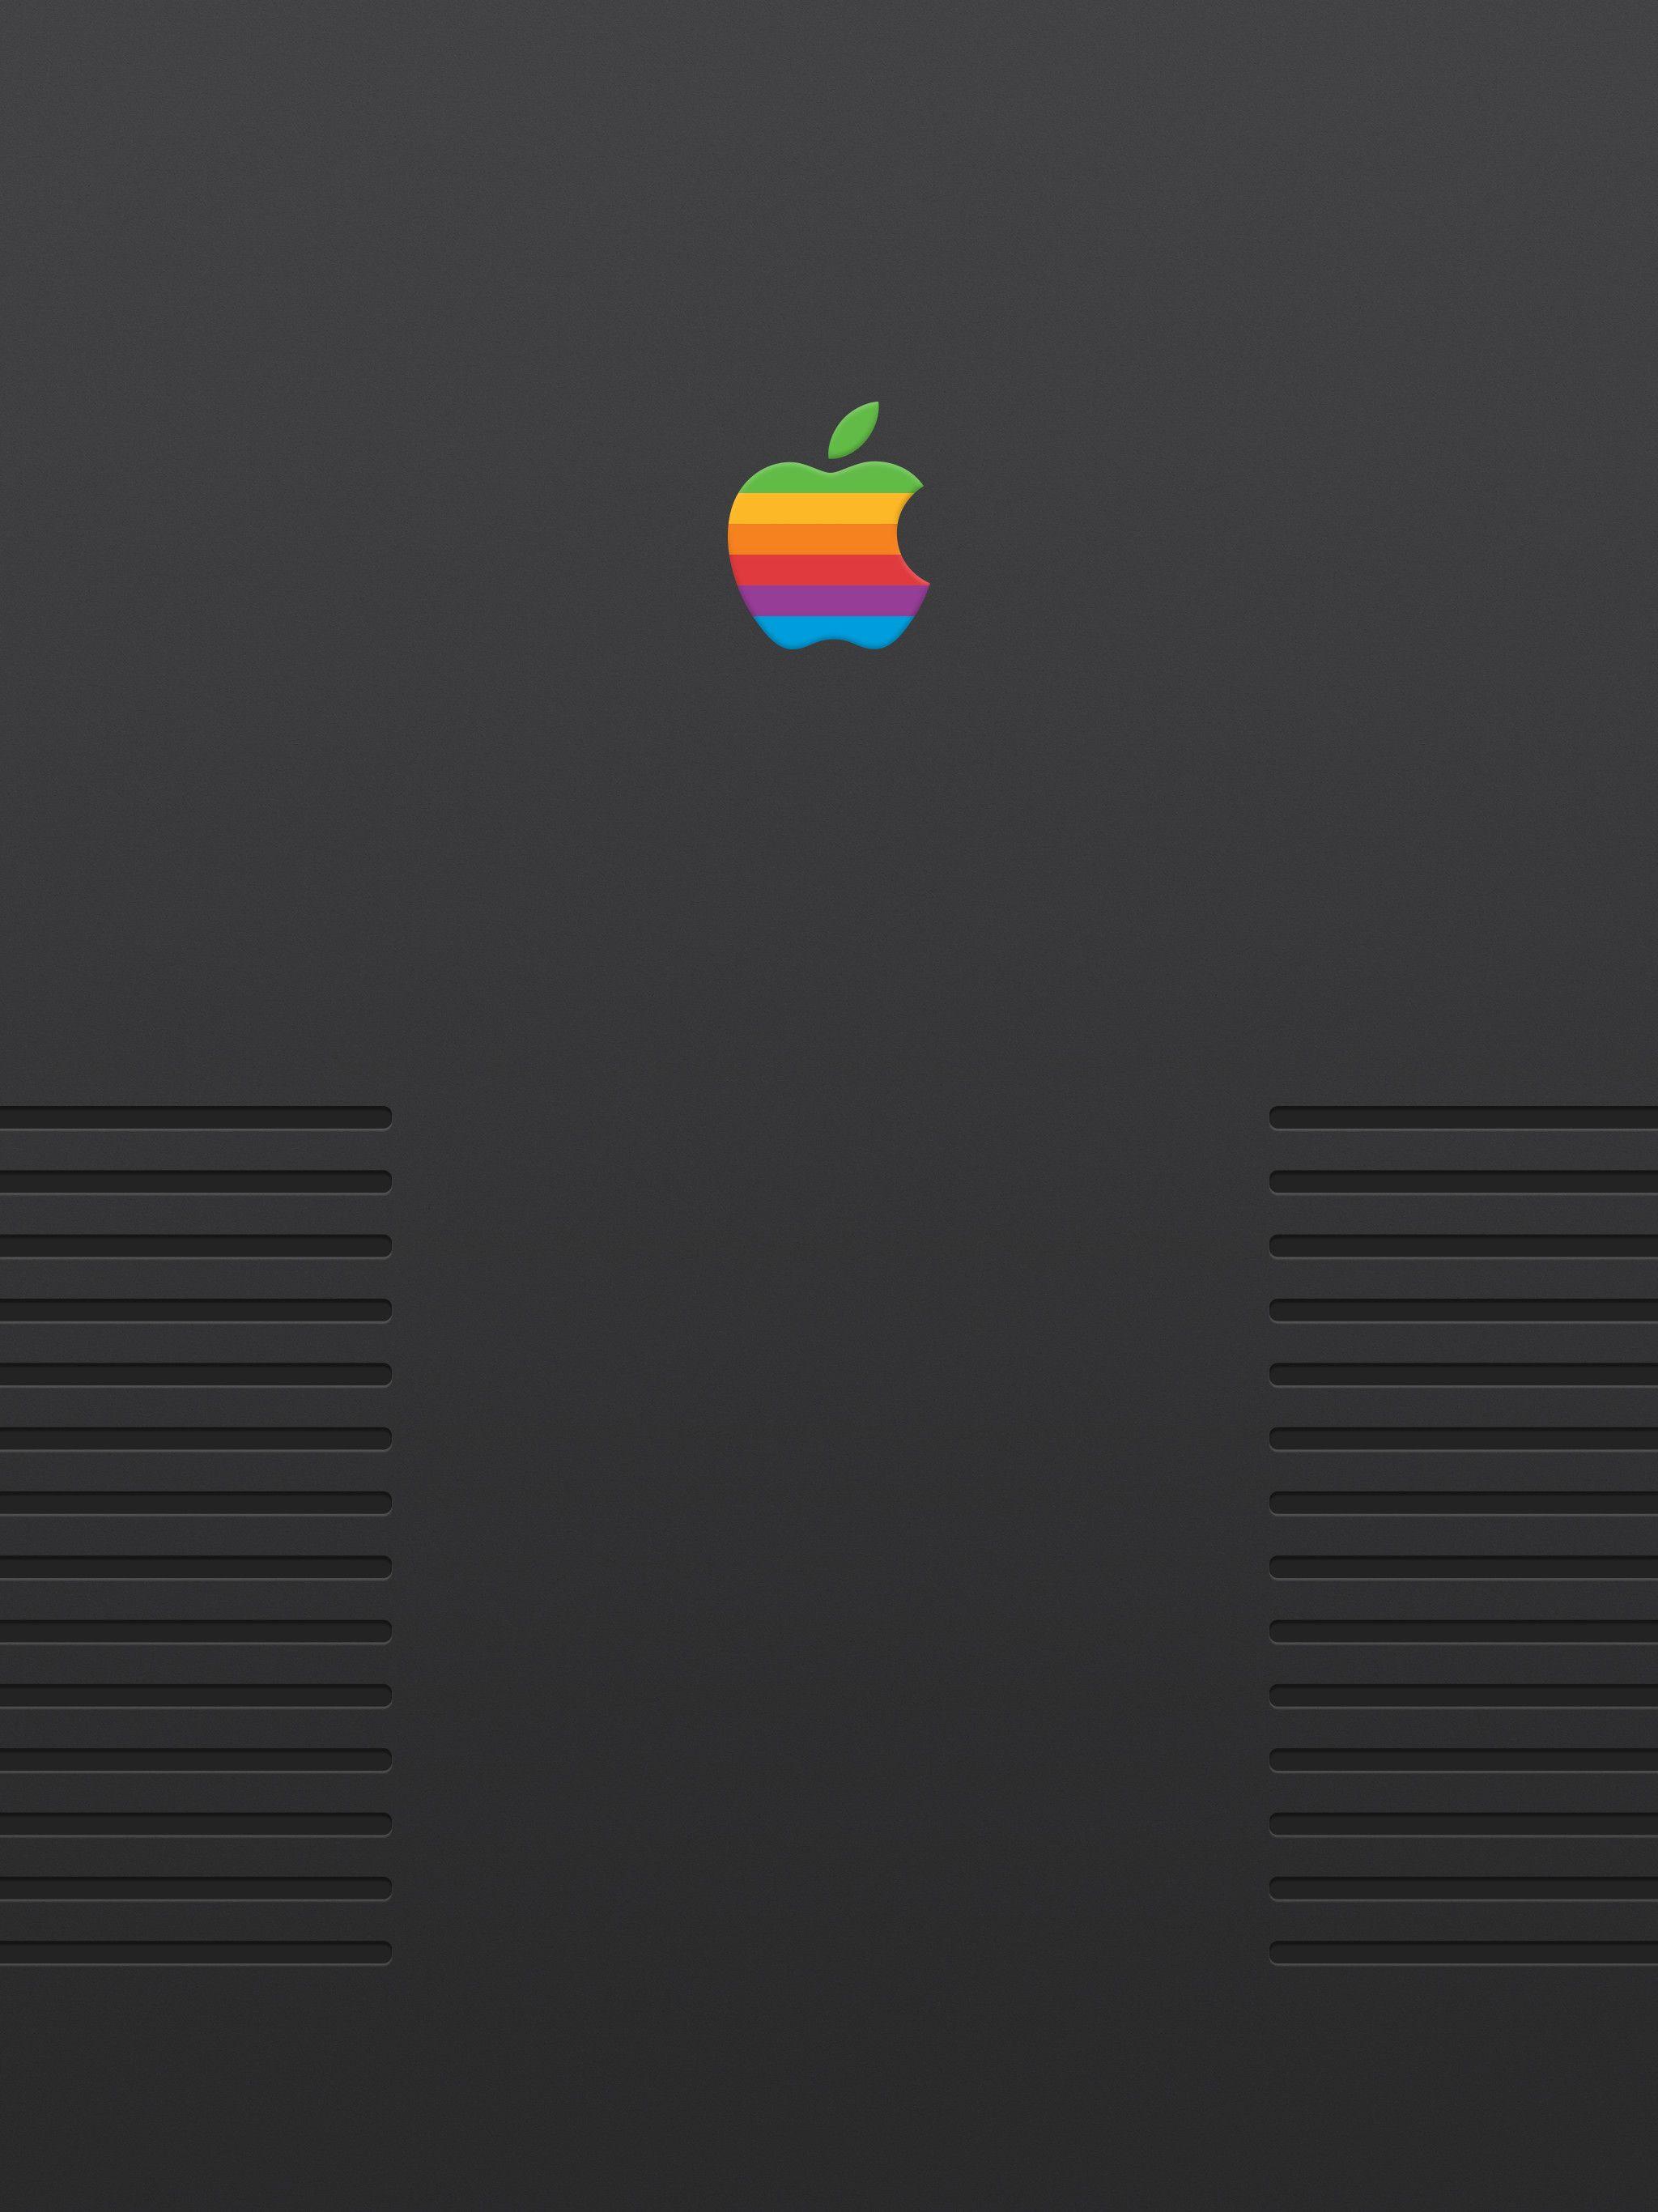 Retro Apple Logo WWDC 2016 wallpapers